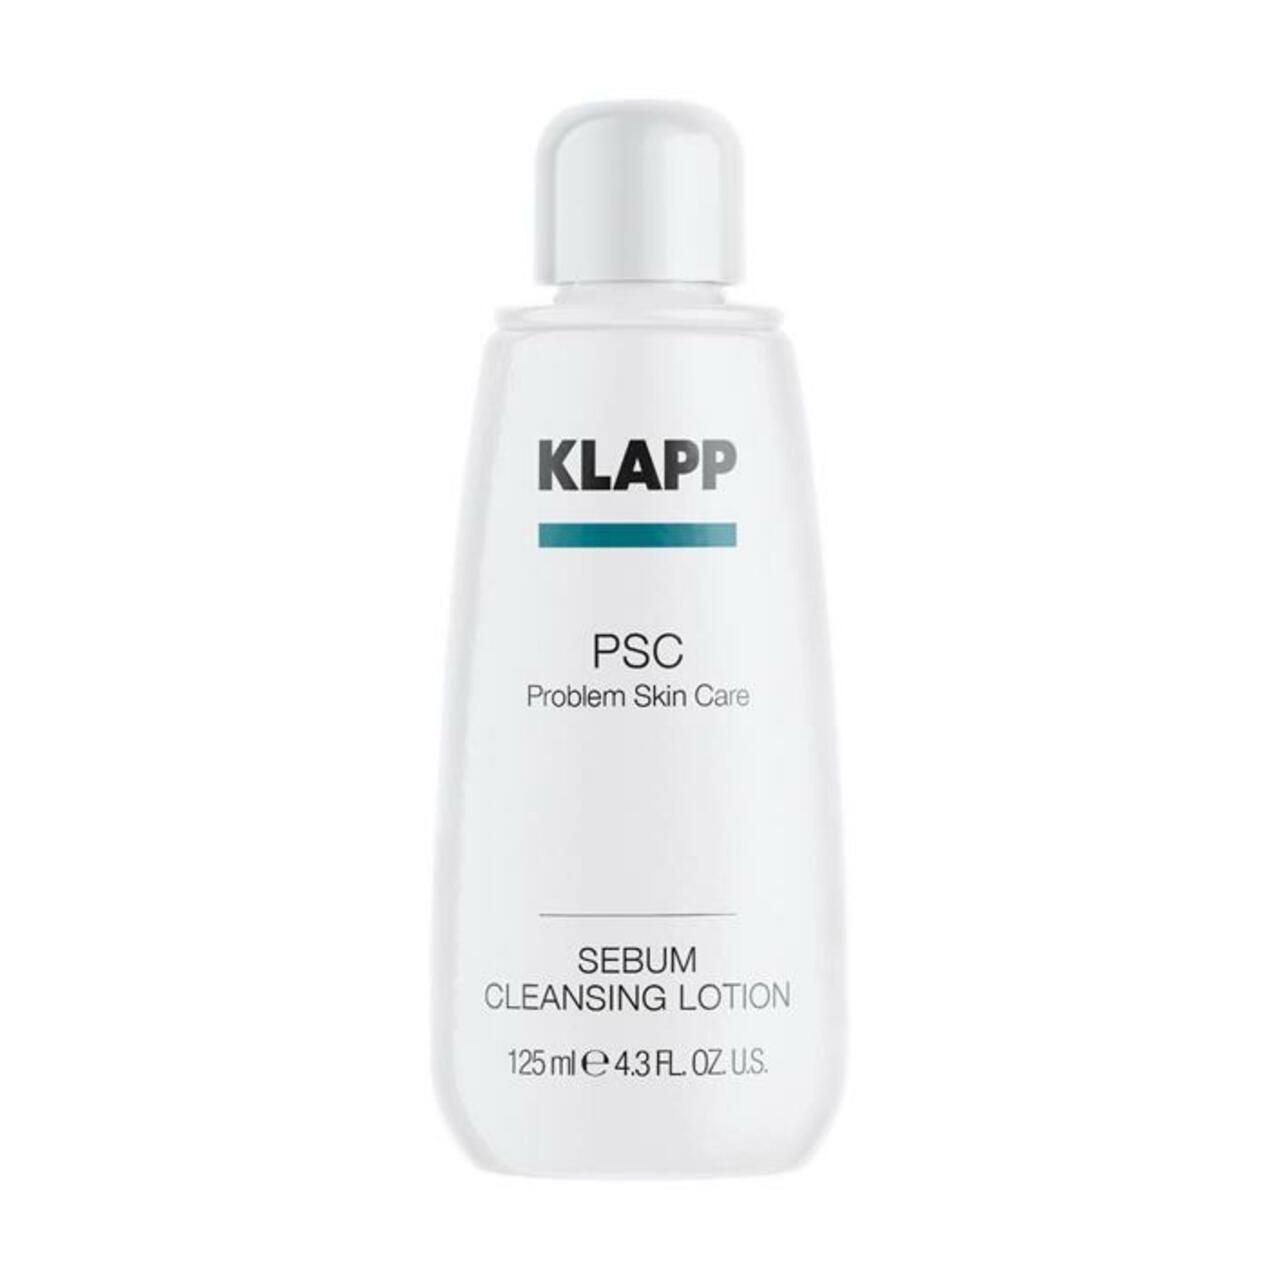 Klapp, PSC Problem Skin Care Sebum Cleansing Lotion